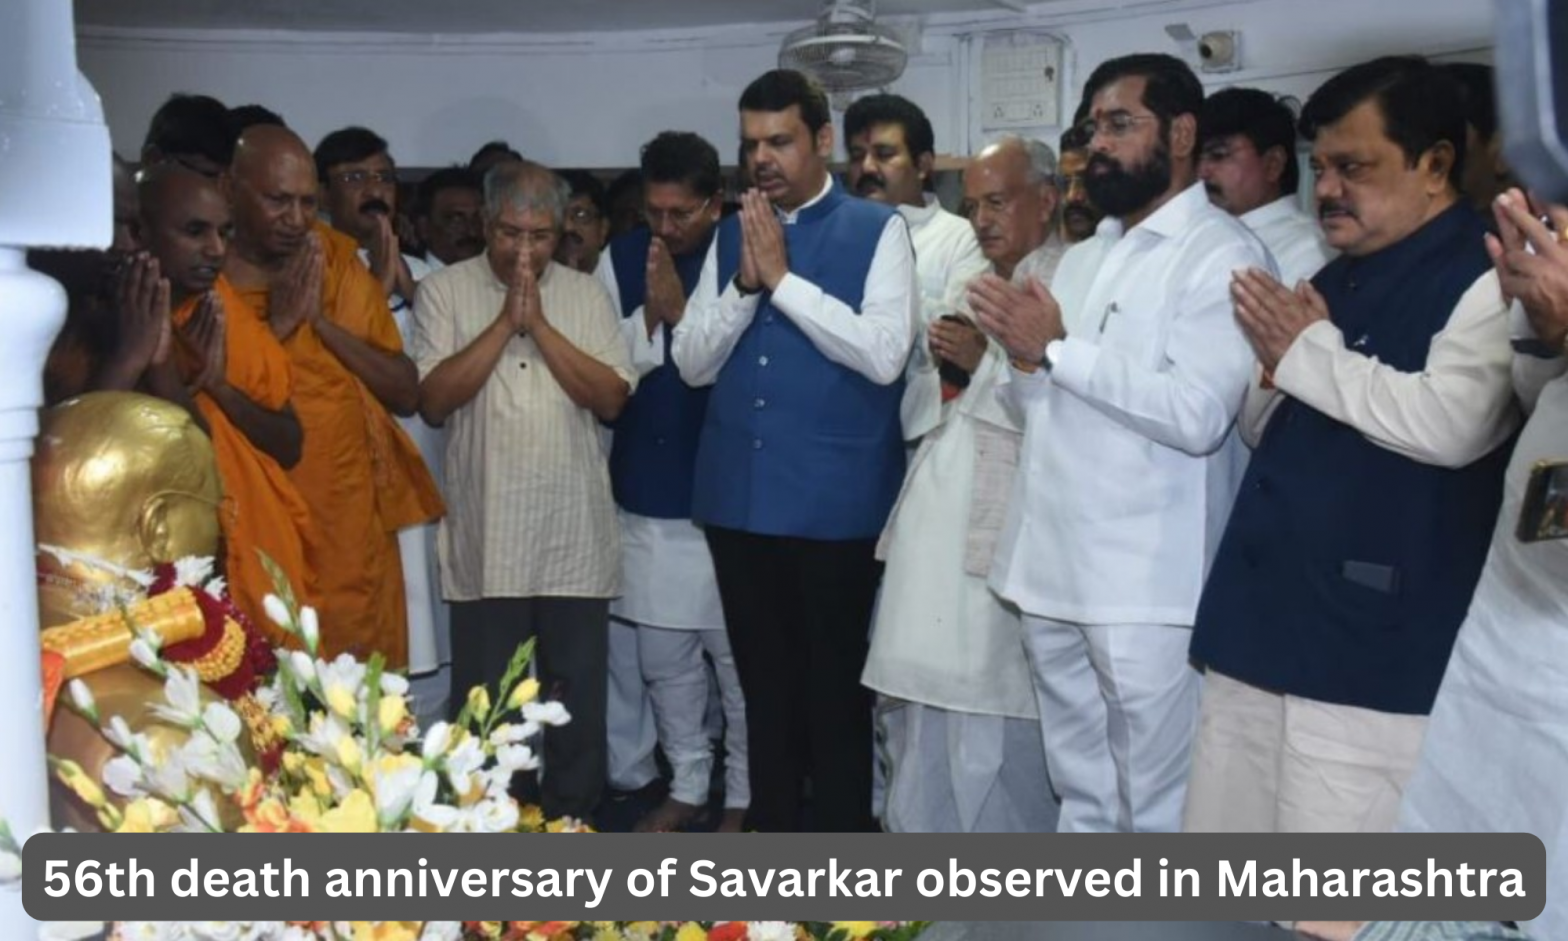 56th death anniversary of Savarkar observed in Maharashtra